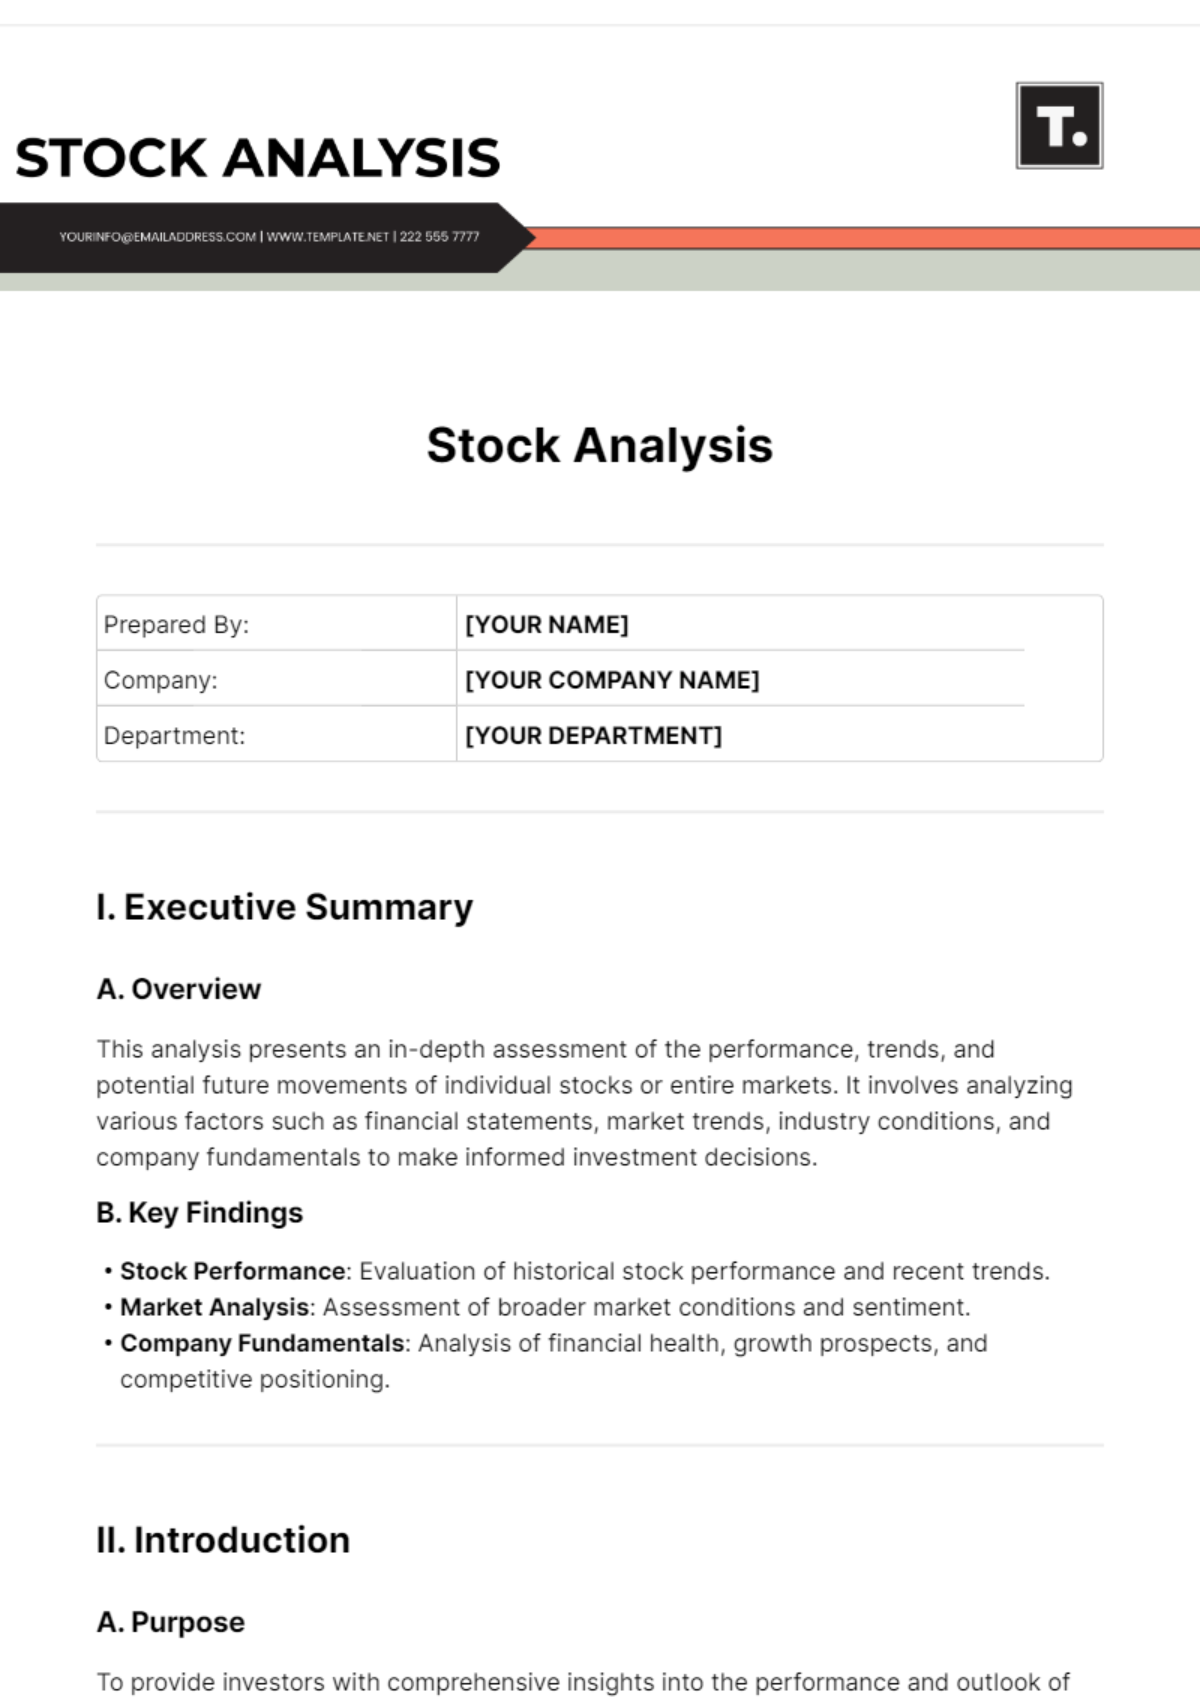 Free Stock Analysis Template